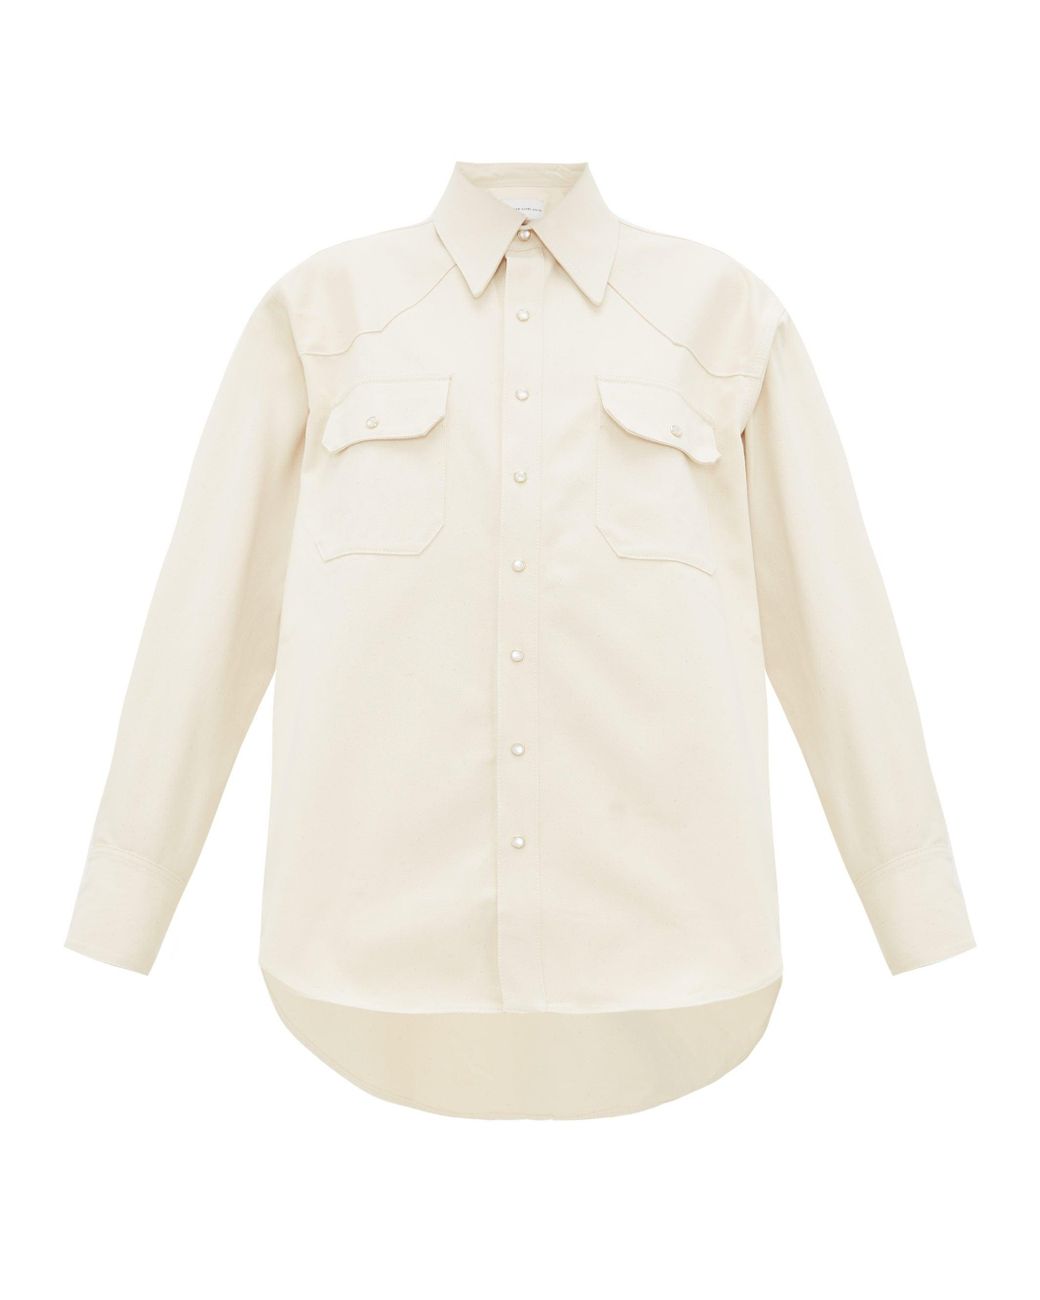 Matthew Adams Dolan Western Side-pleat Denim Shirt in Ivory (White) - Lyst